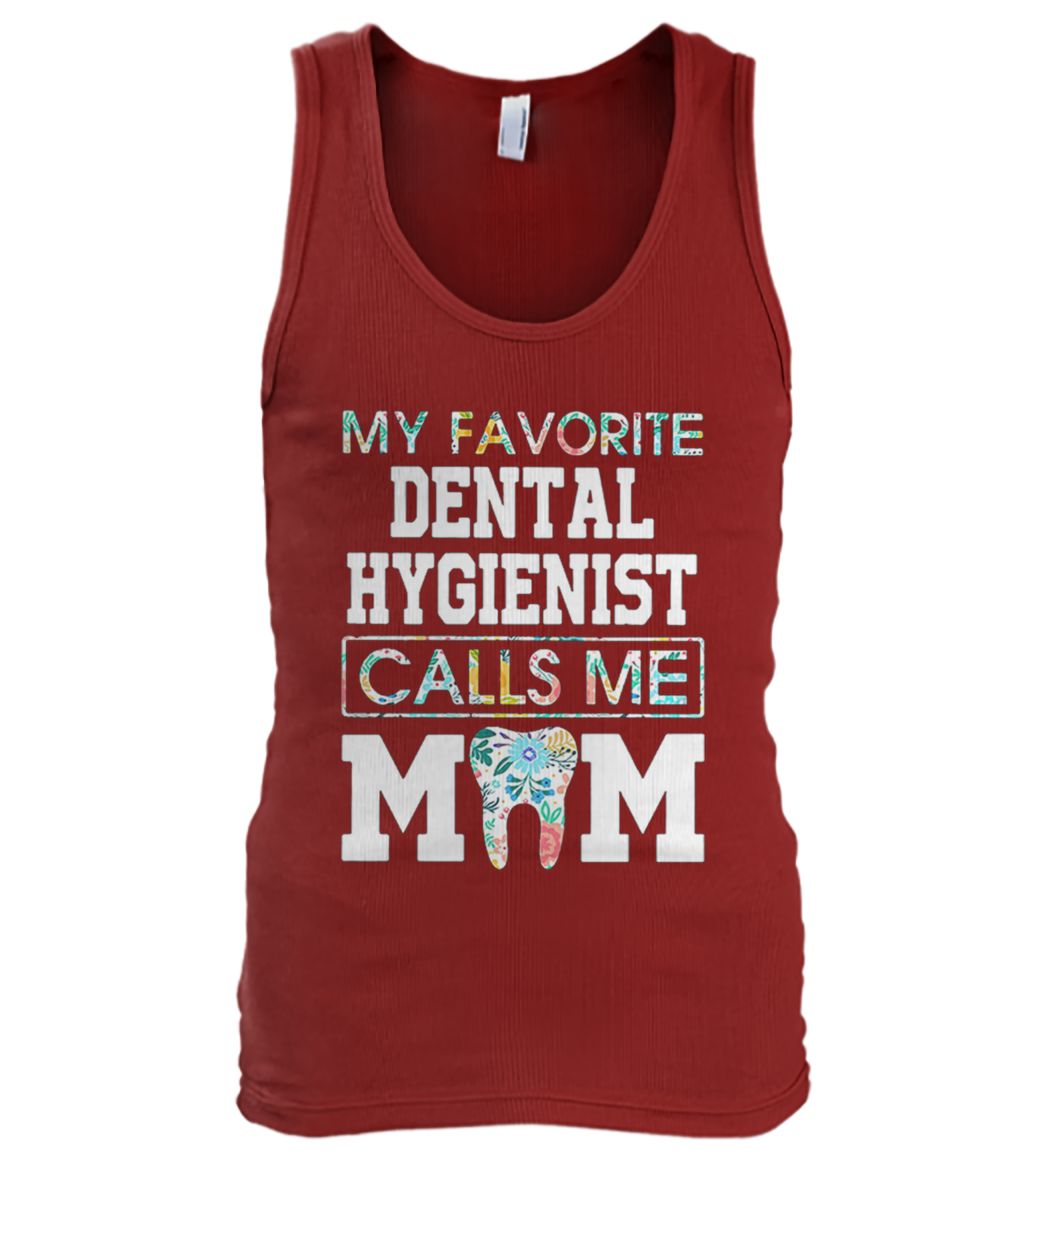 My favorite dental hygienist calls me mom men's tank top